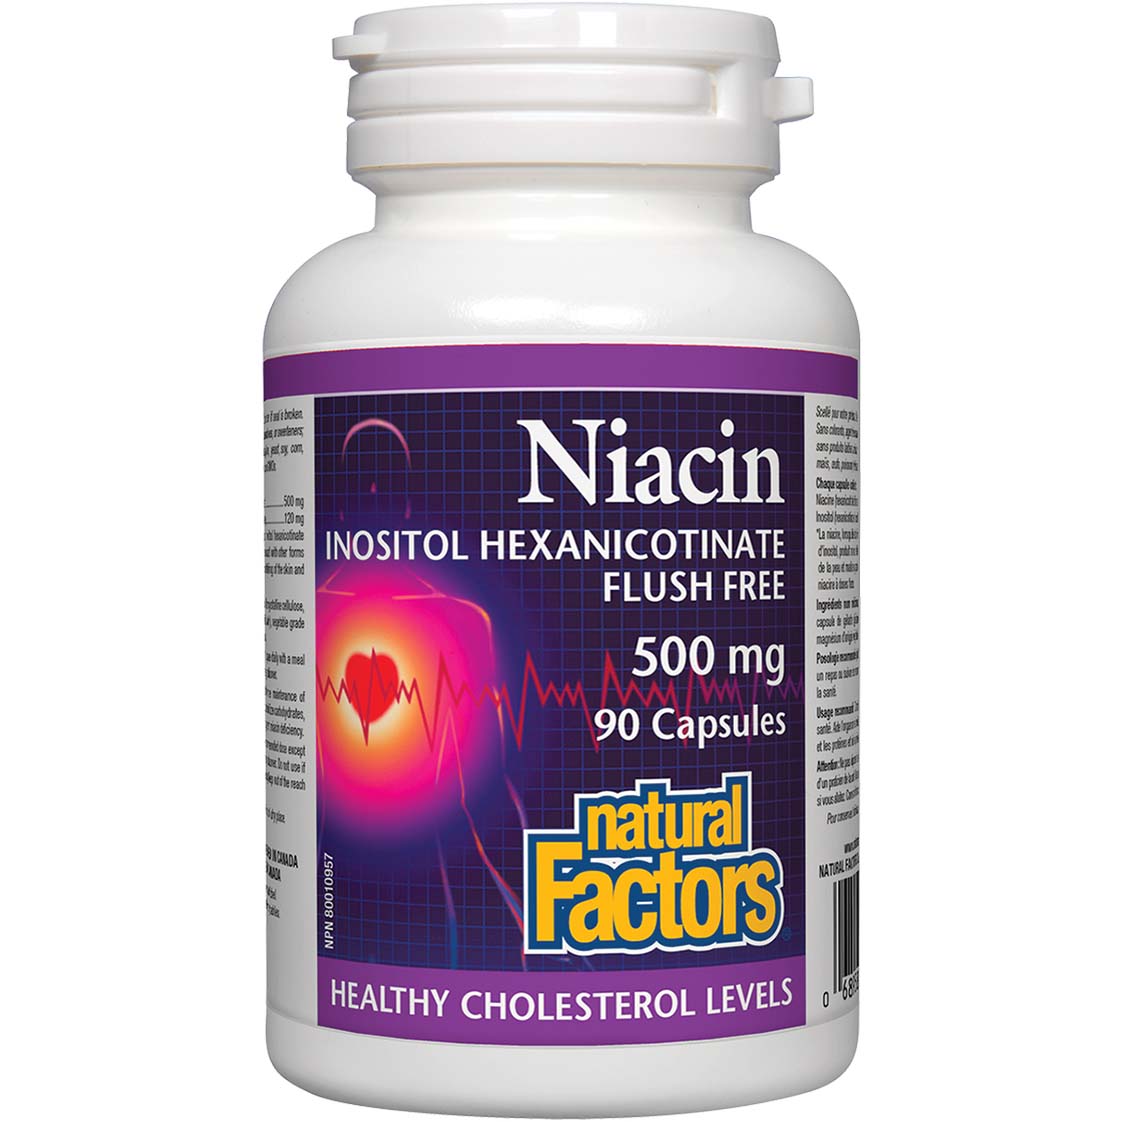 Natural Factors Niacin Inositol Hexanicotinate, 500 mg, 90 Capsules